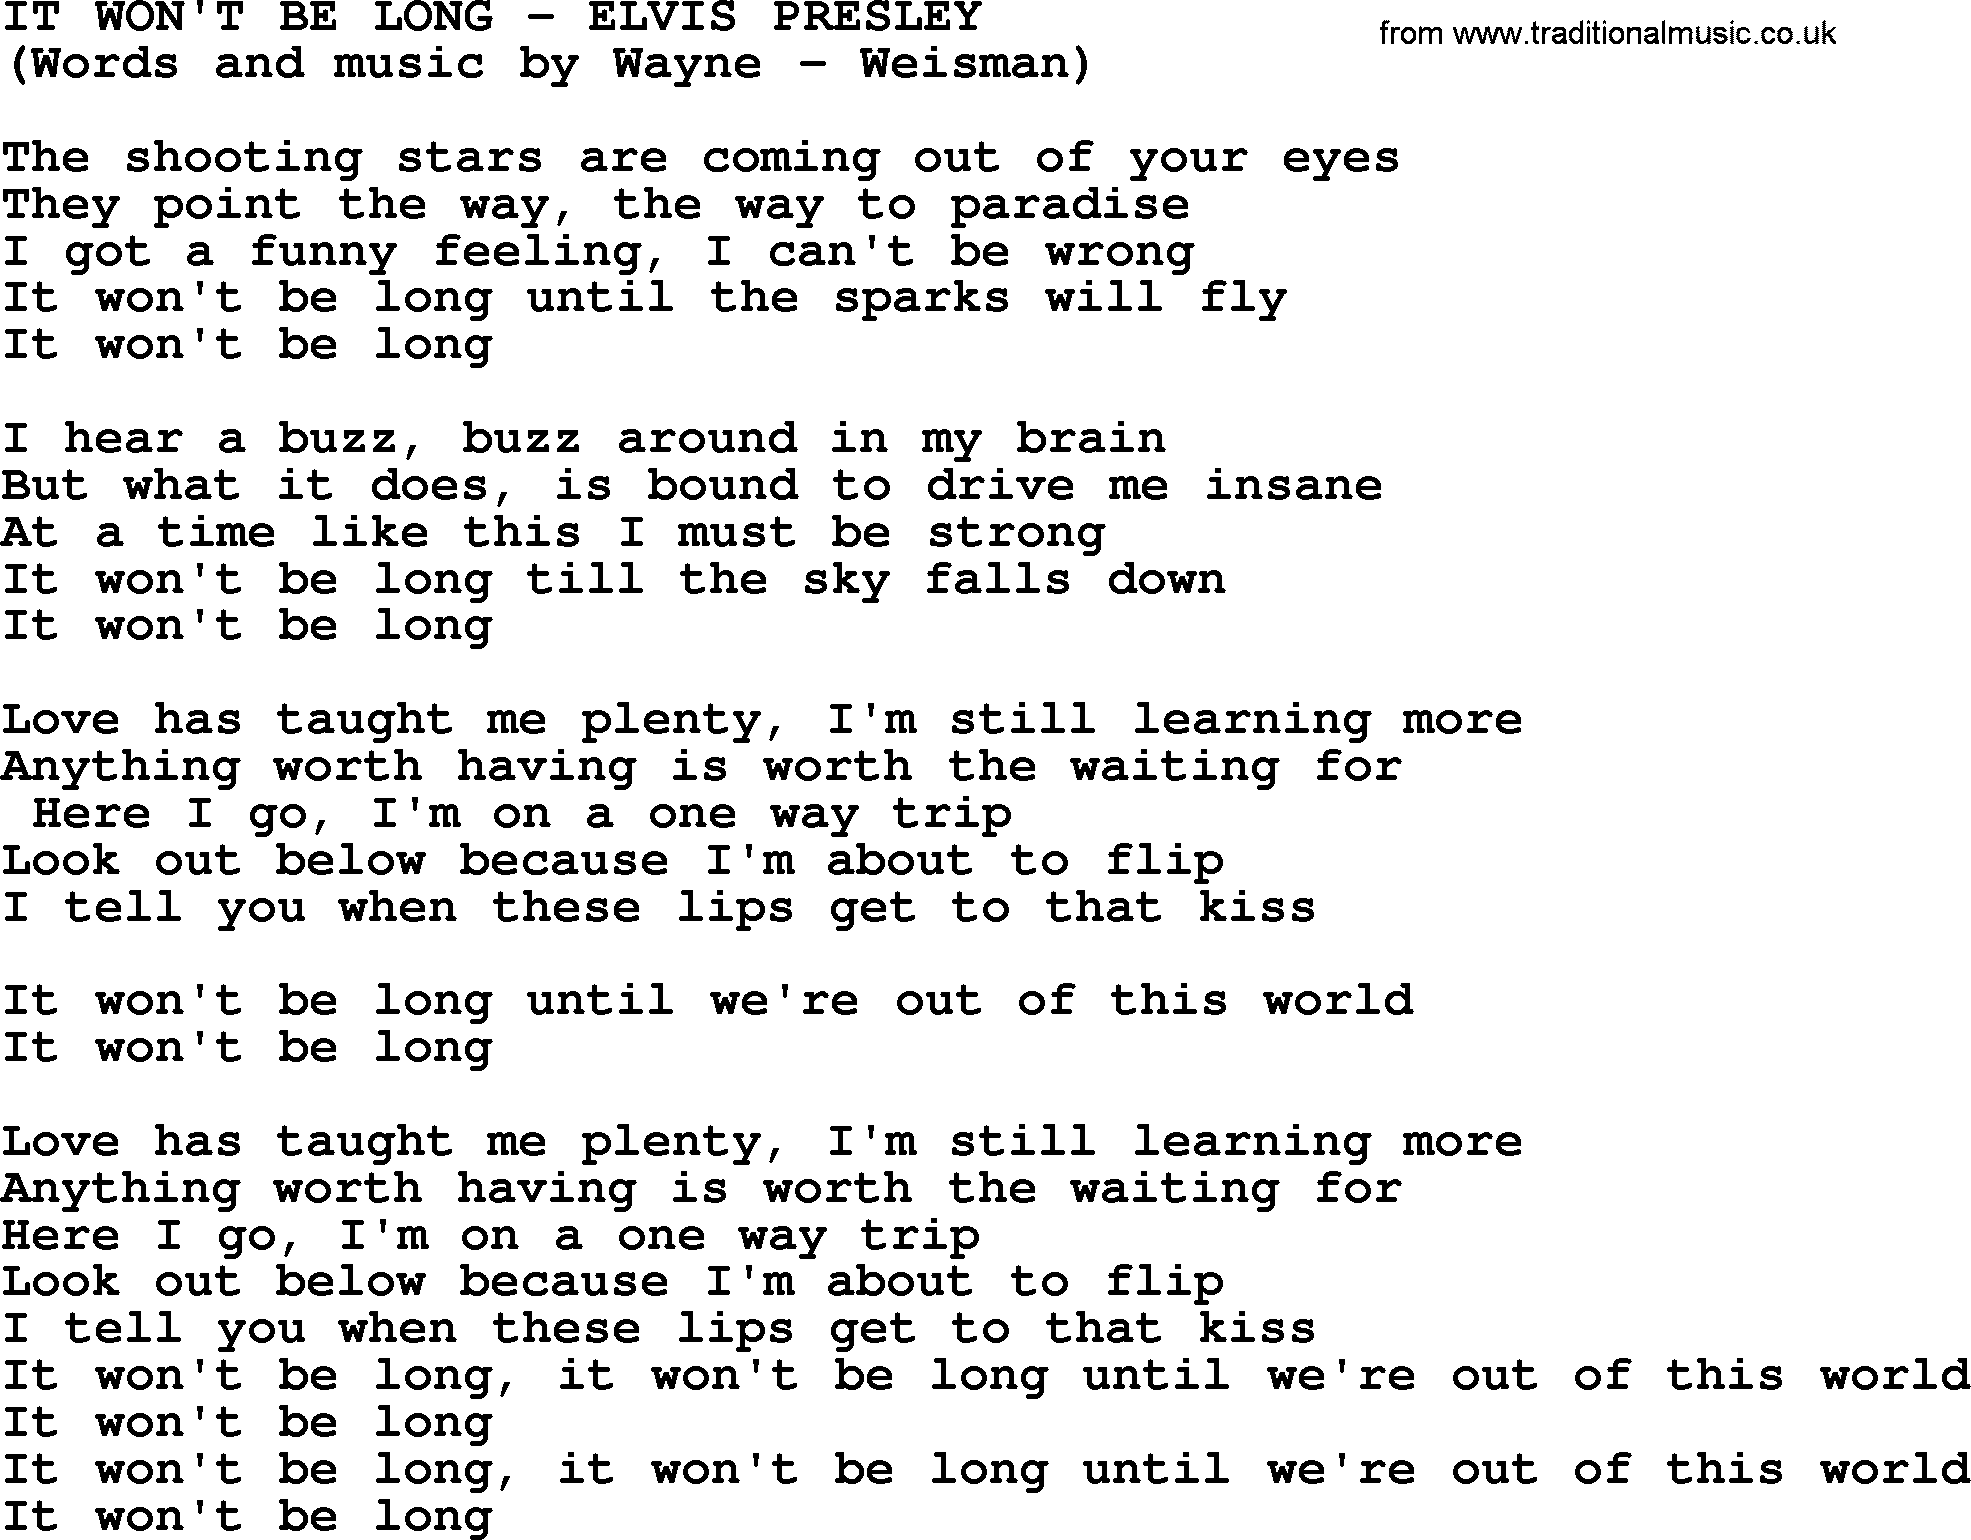 It Won't Be Long by Elvis Presley - lyrics